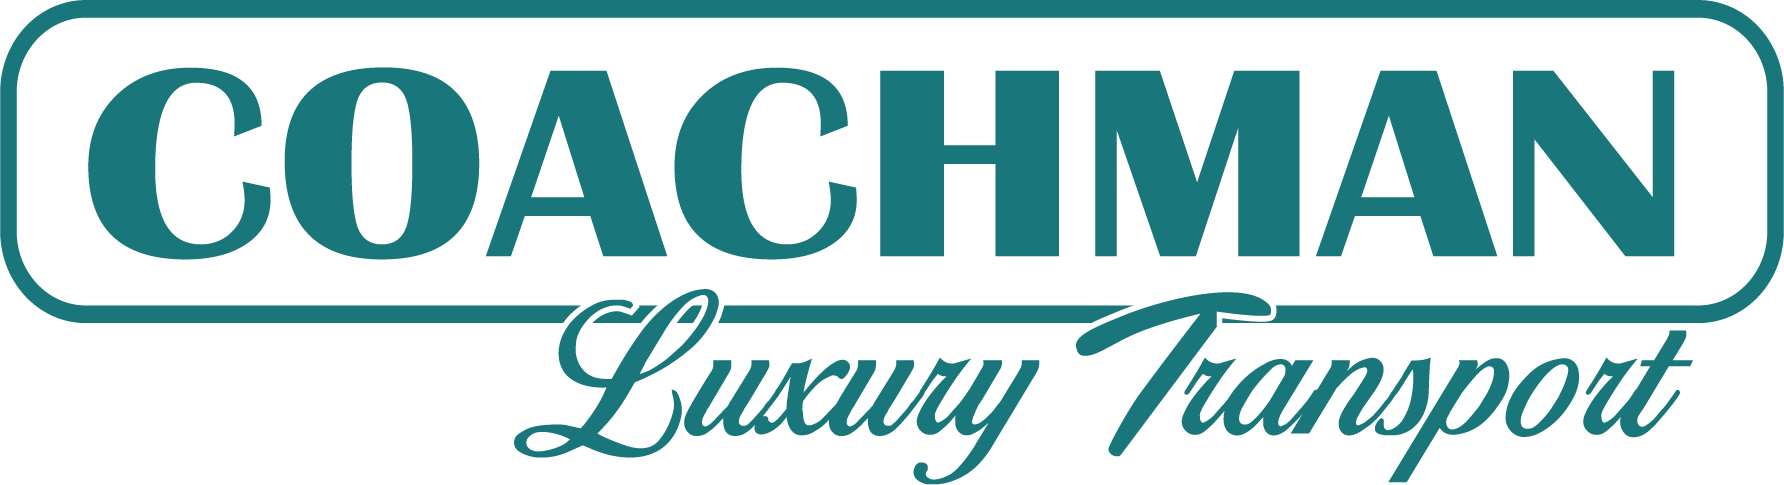 coachman luxury logo